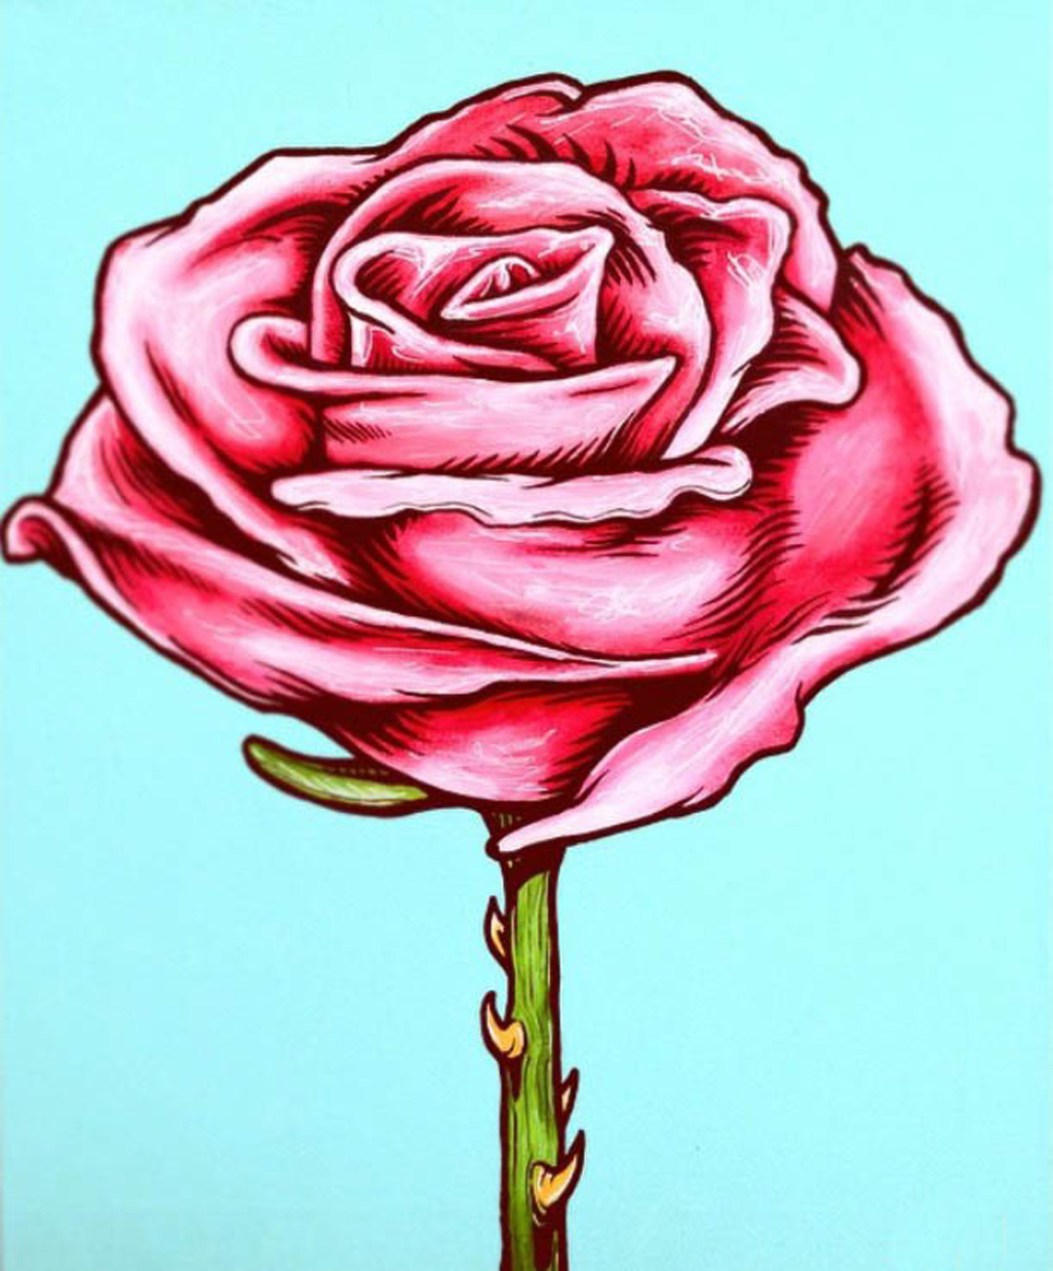 2D Graphic Graffiti Style Rose Flower Illustration